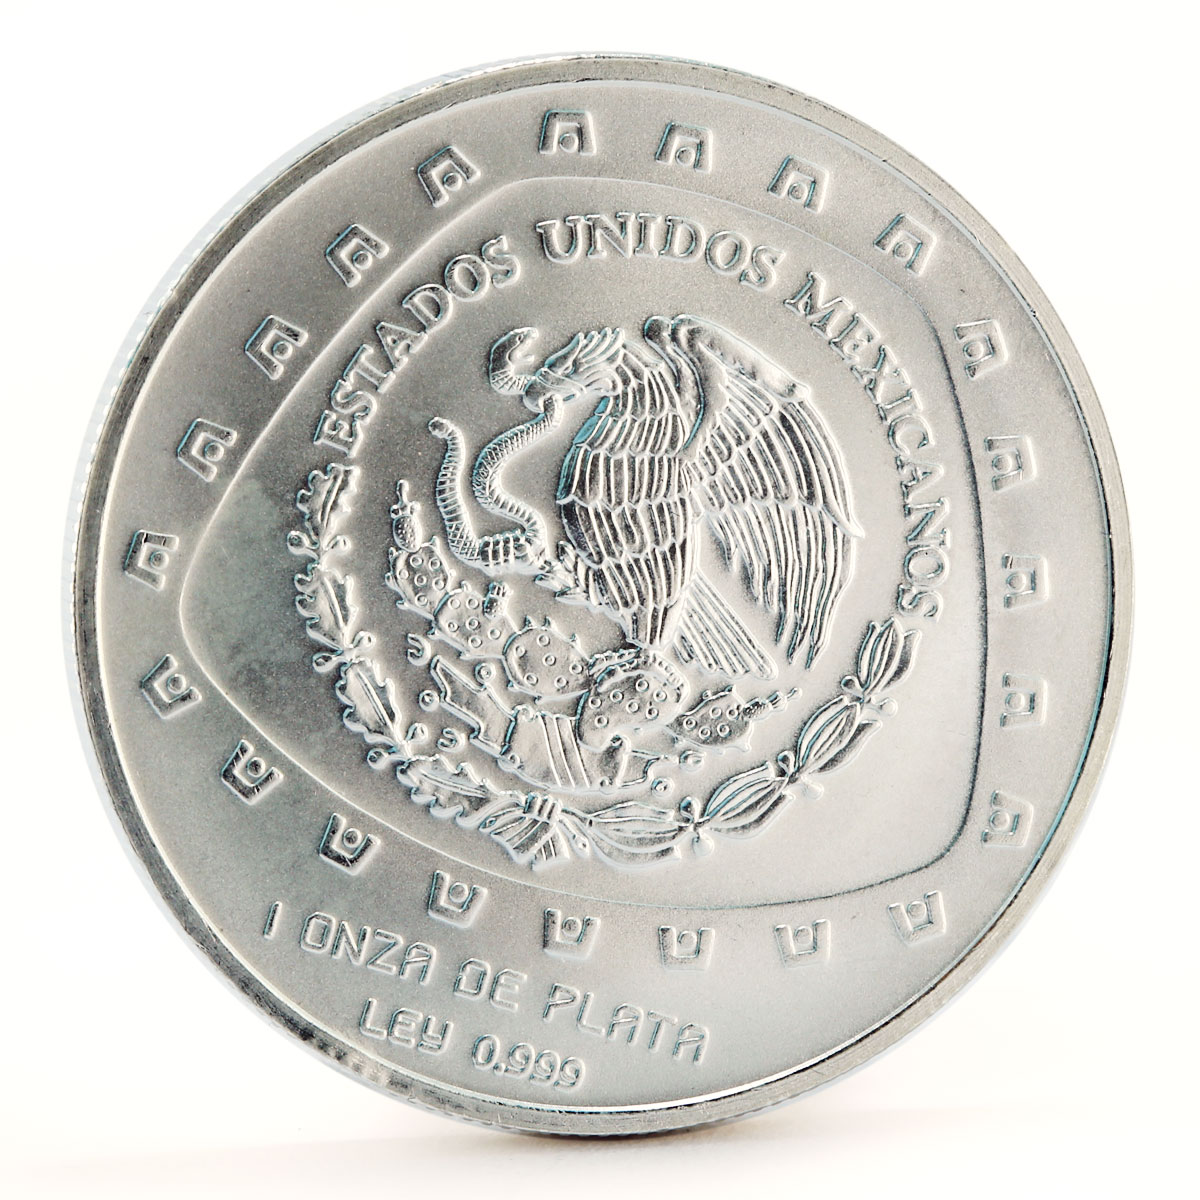 Mexico 5 pesos Serpiente con Craneo Snake Skull proof silver coin 1998